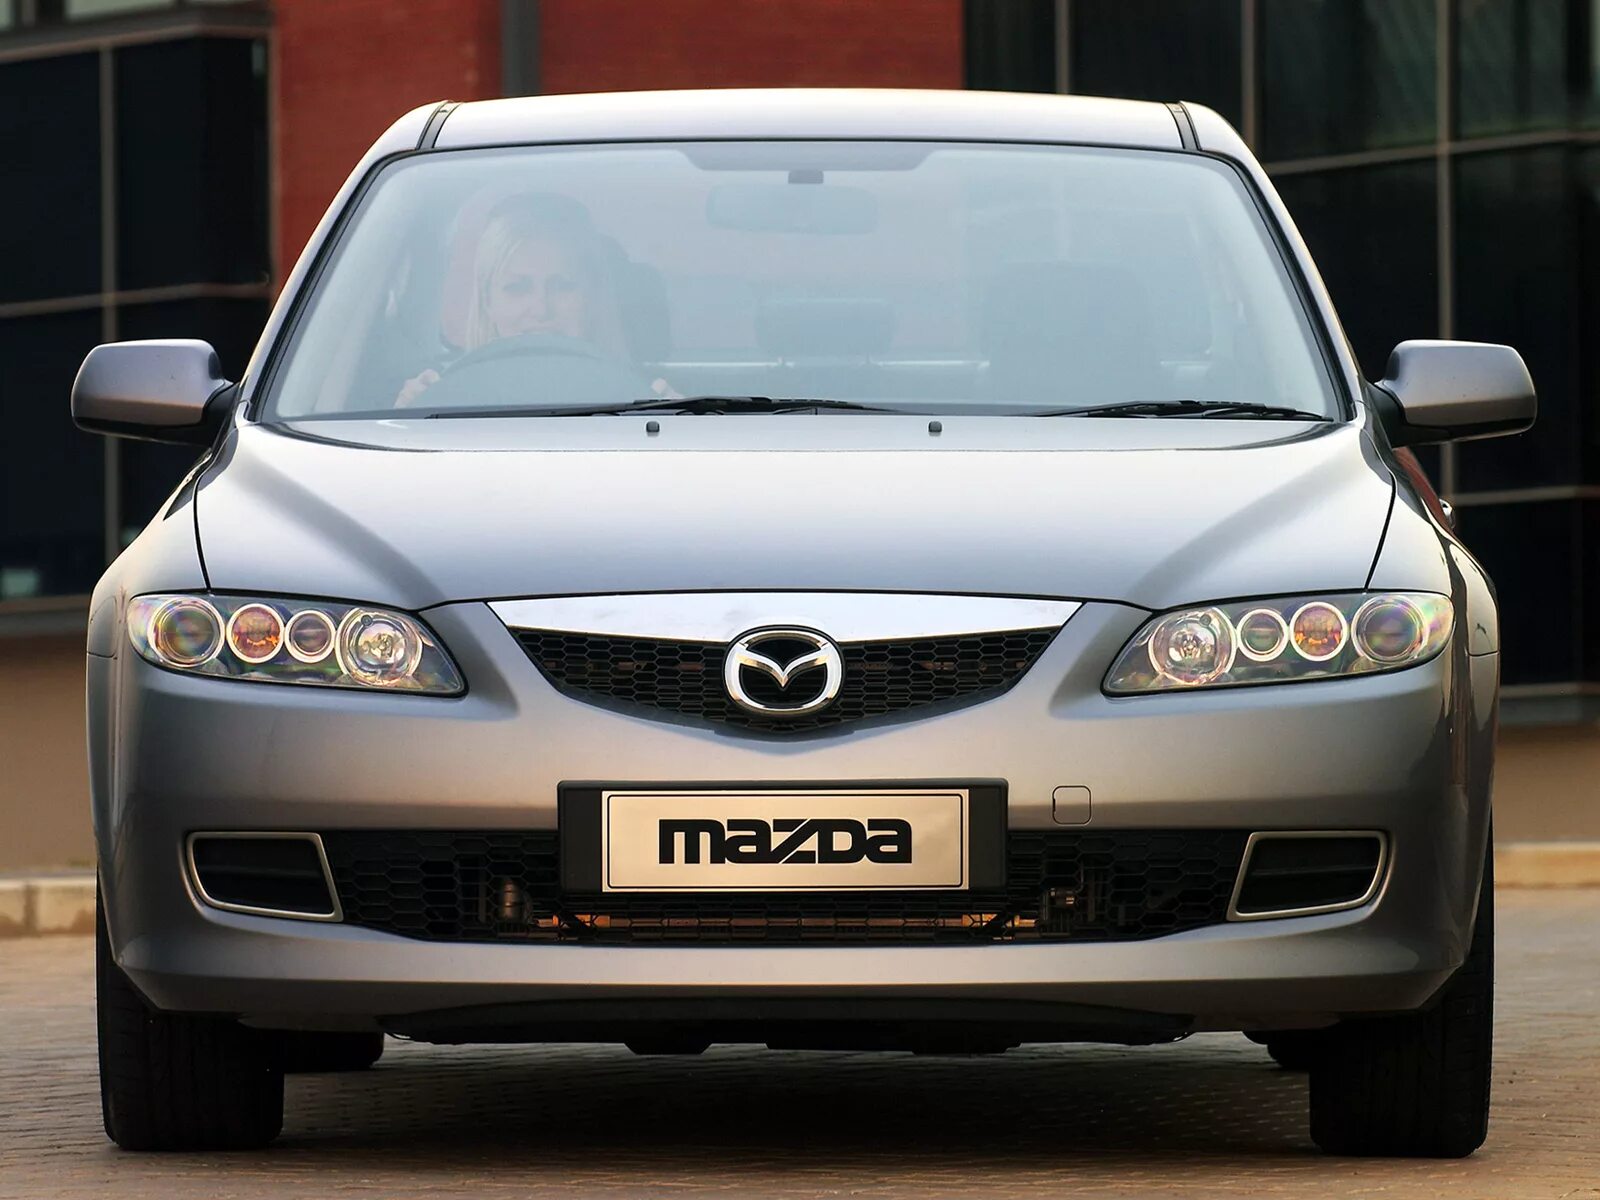 Mazda 6 gg. Mazda 6 gg 2005. Mazda 6 gg Atenza. Мазда 6 седан 2006.